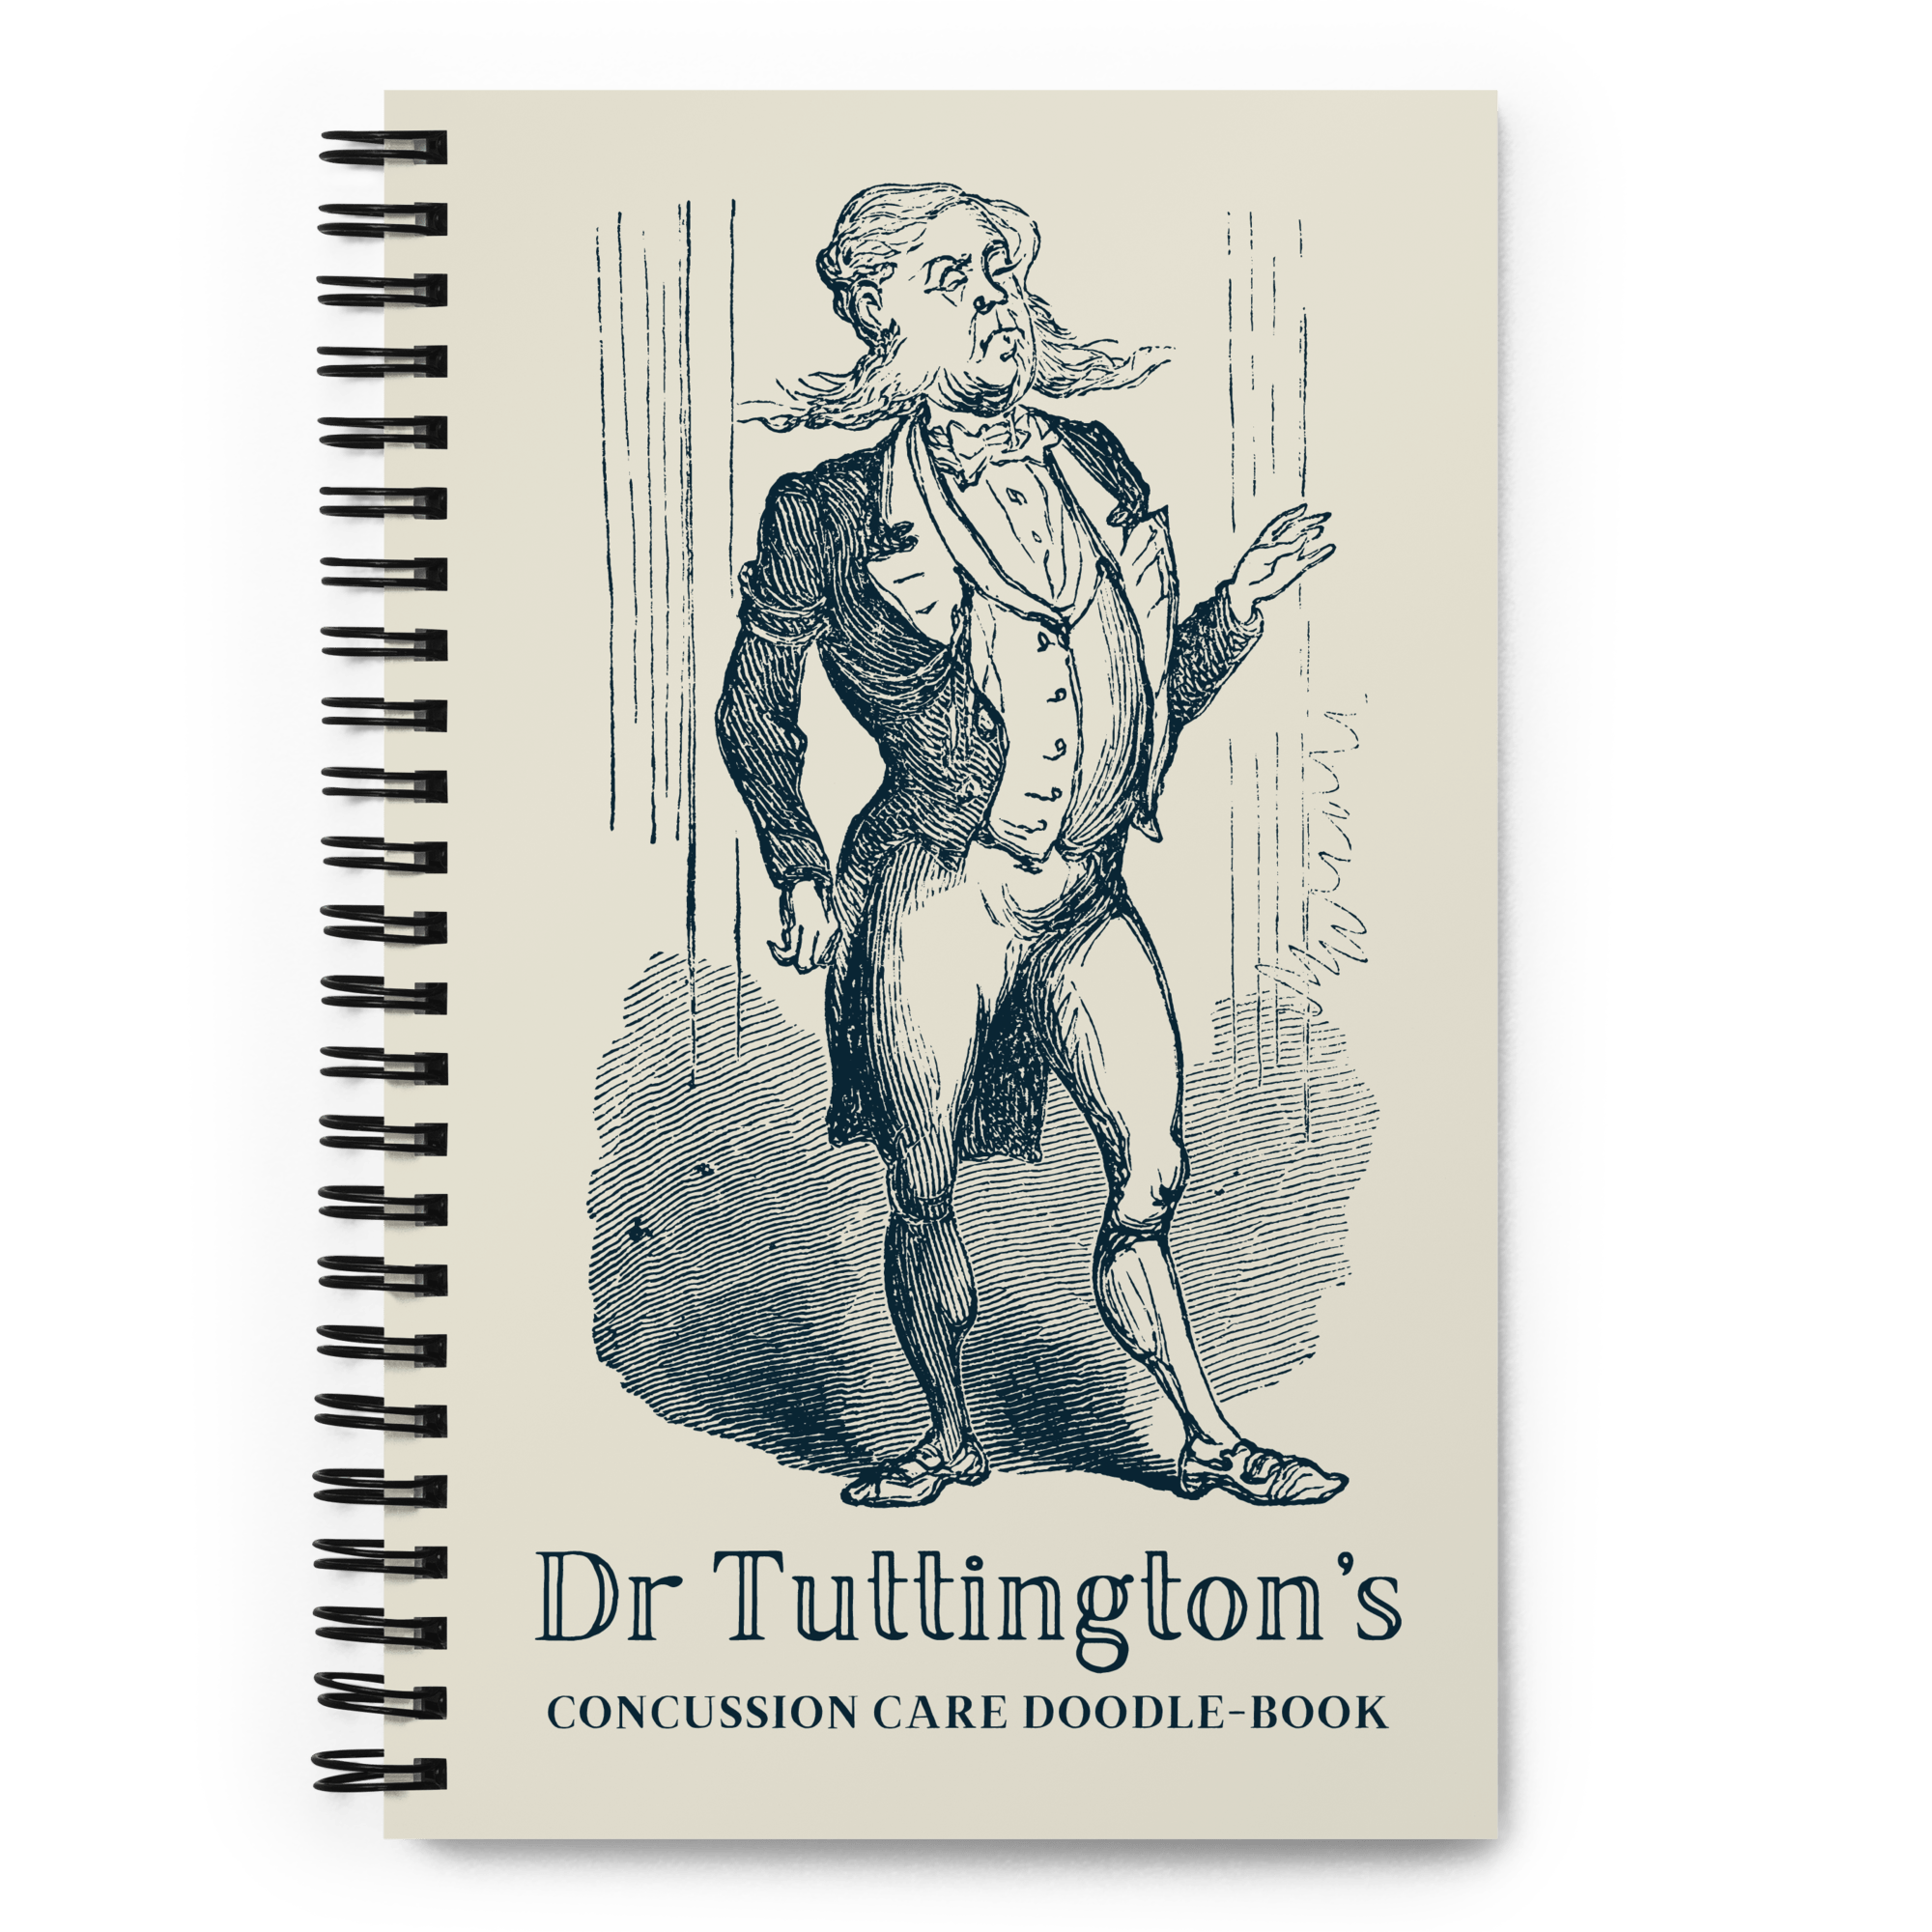 Dr Tuttington's Concussion Care Doodle-Book Posters, Prints, & Visual Artwork Jolly & Goode